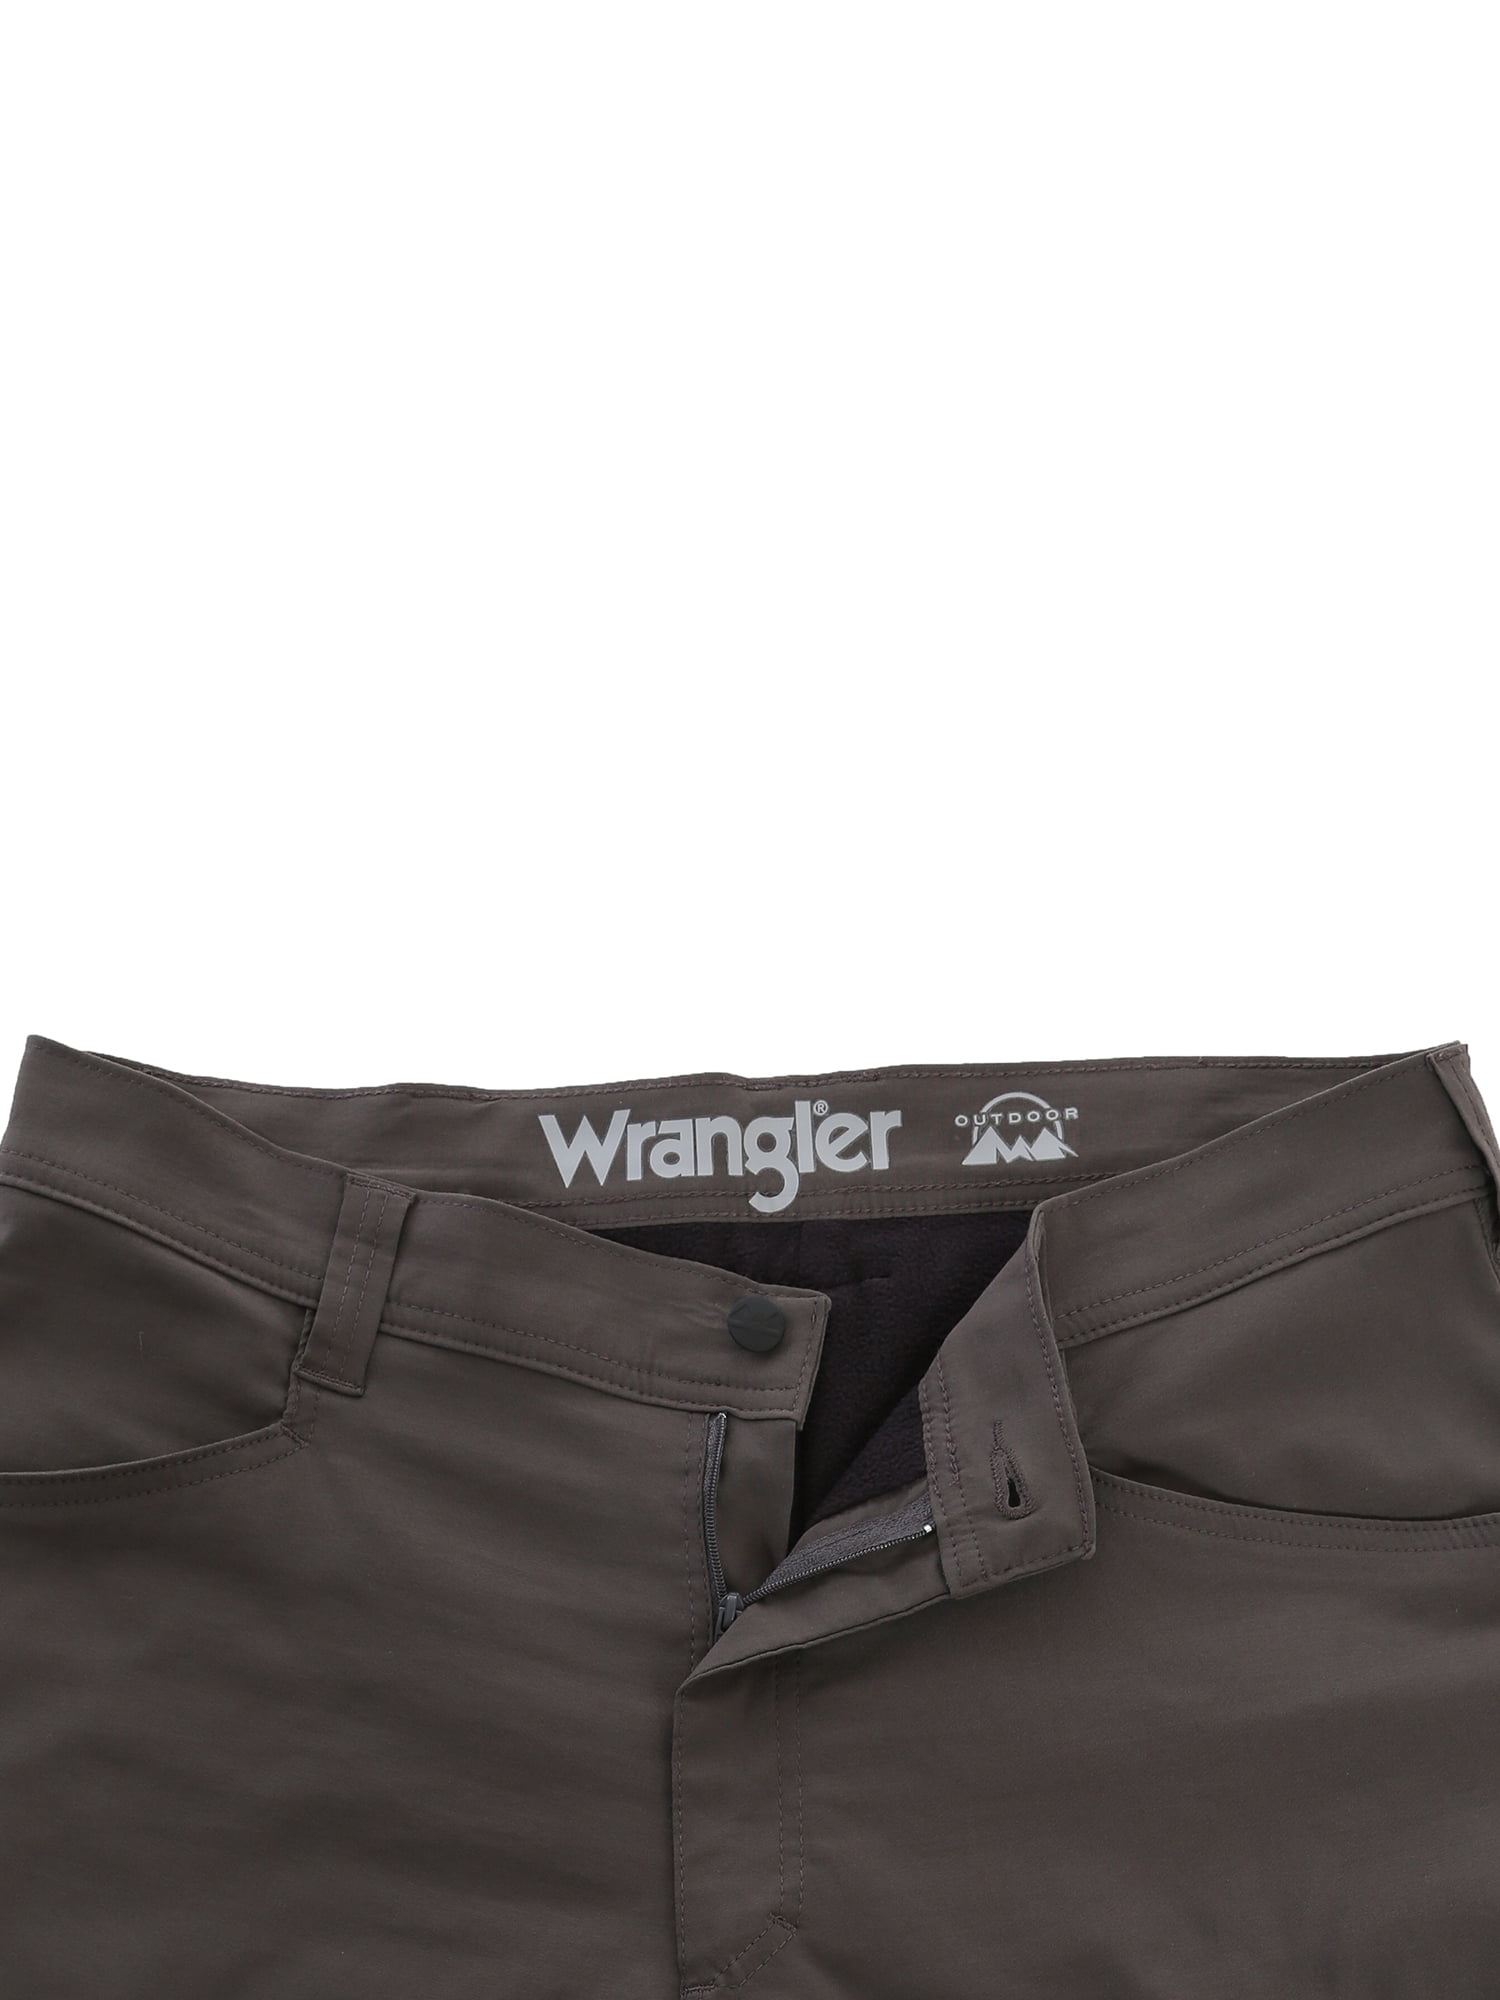 lined wrangler pants